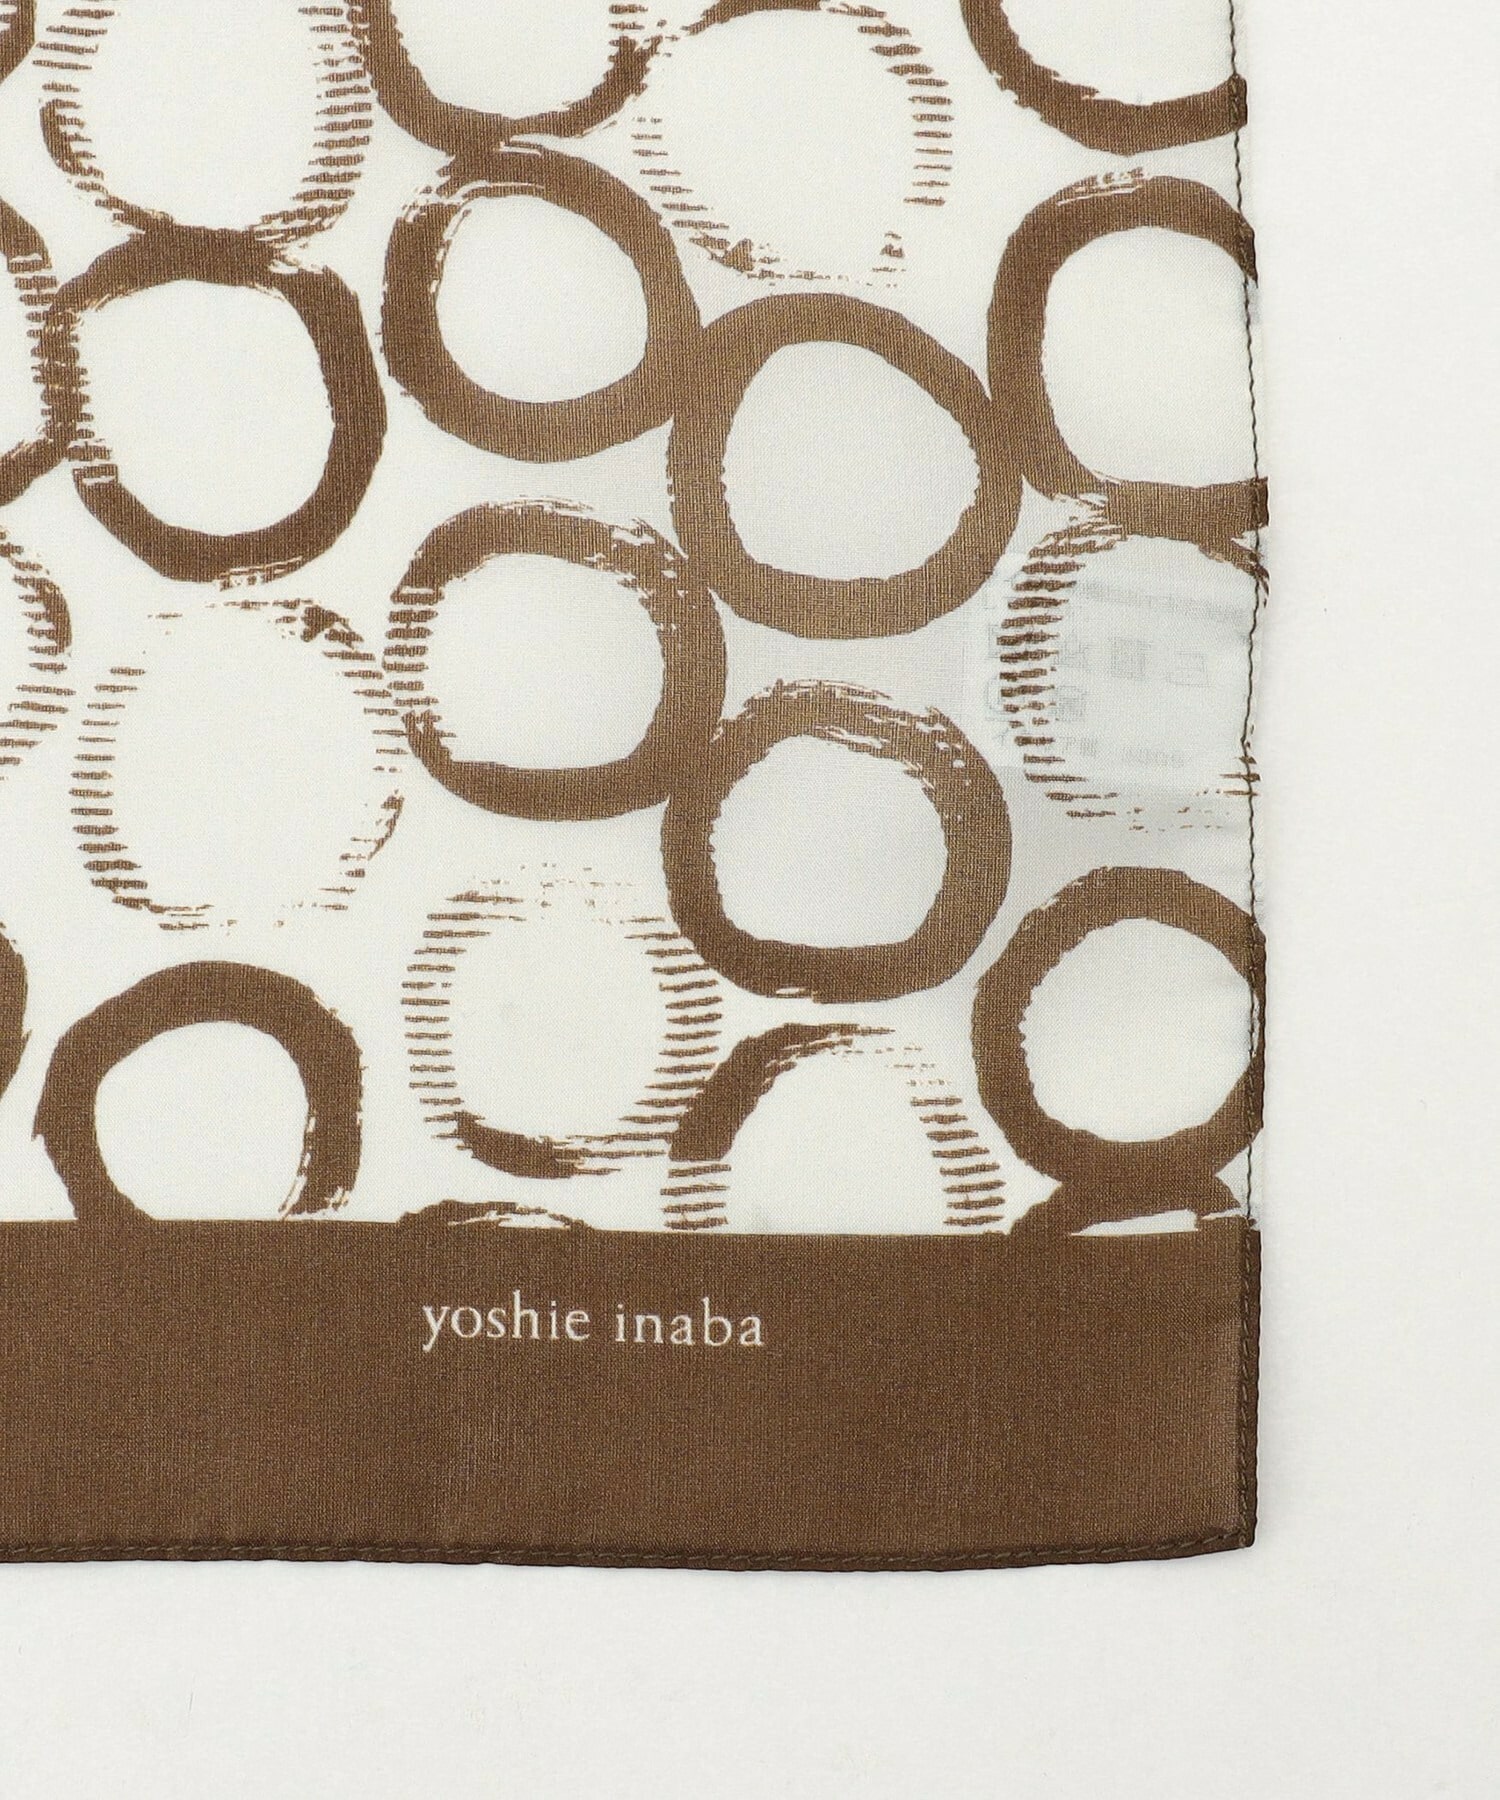 【yoshie inaba】 6匁シルク羽二重サークルプリントスカーフ 詳細画像 ブラウン 1